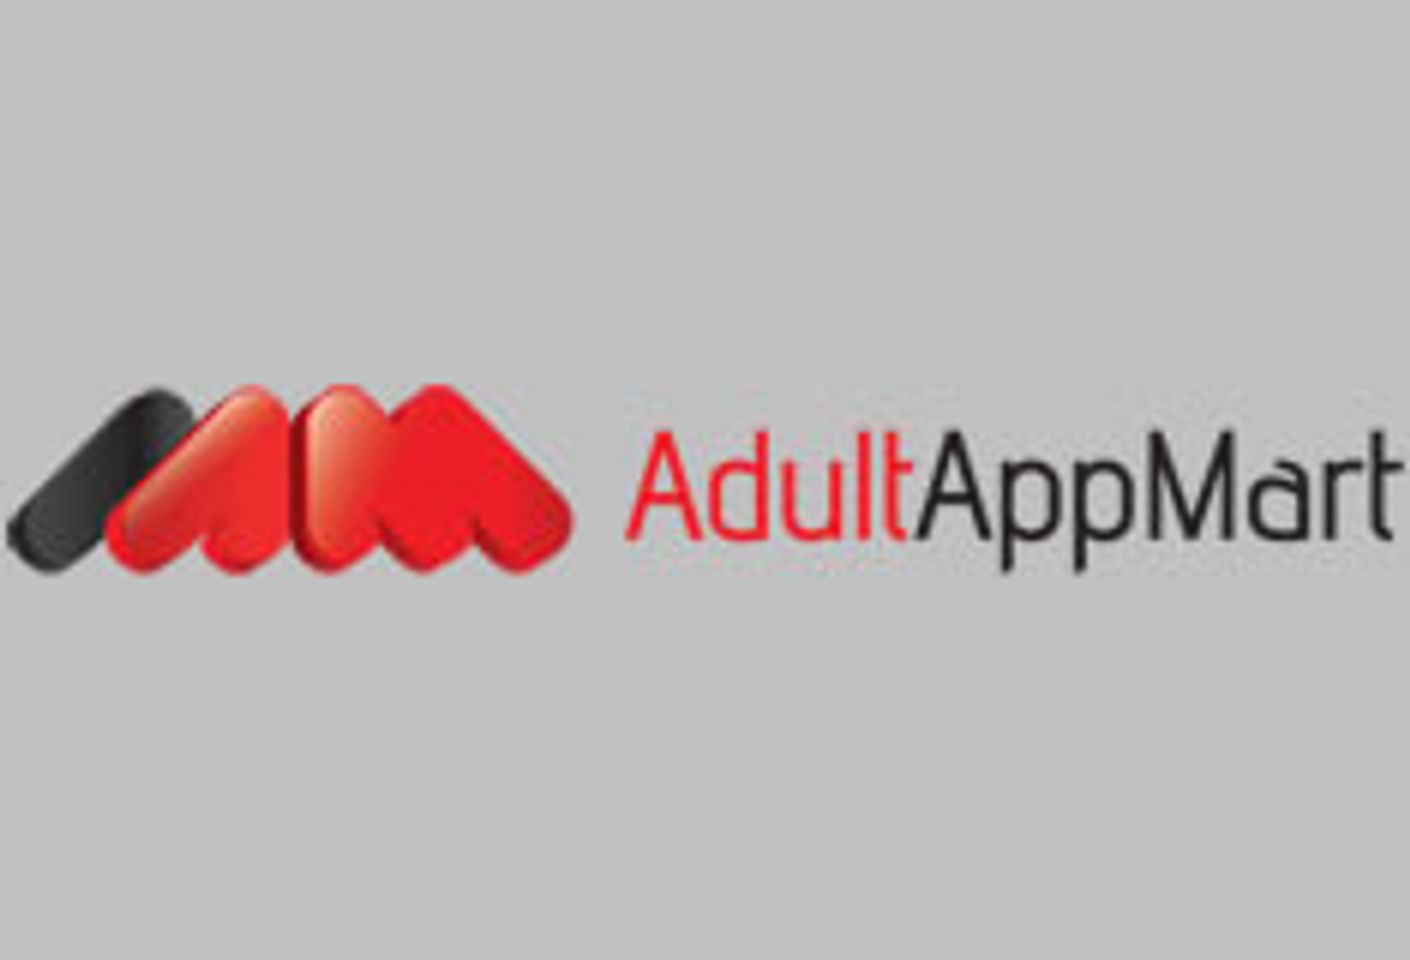 AdultAppMart Blasts Past 1,000 Apps